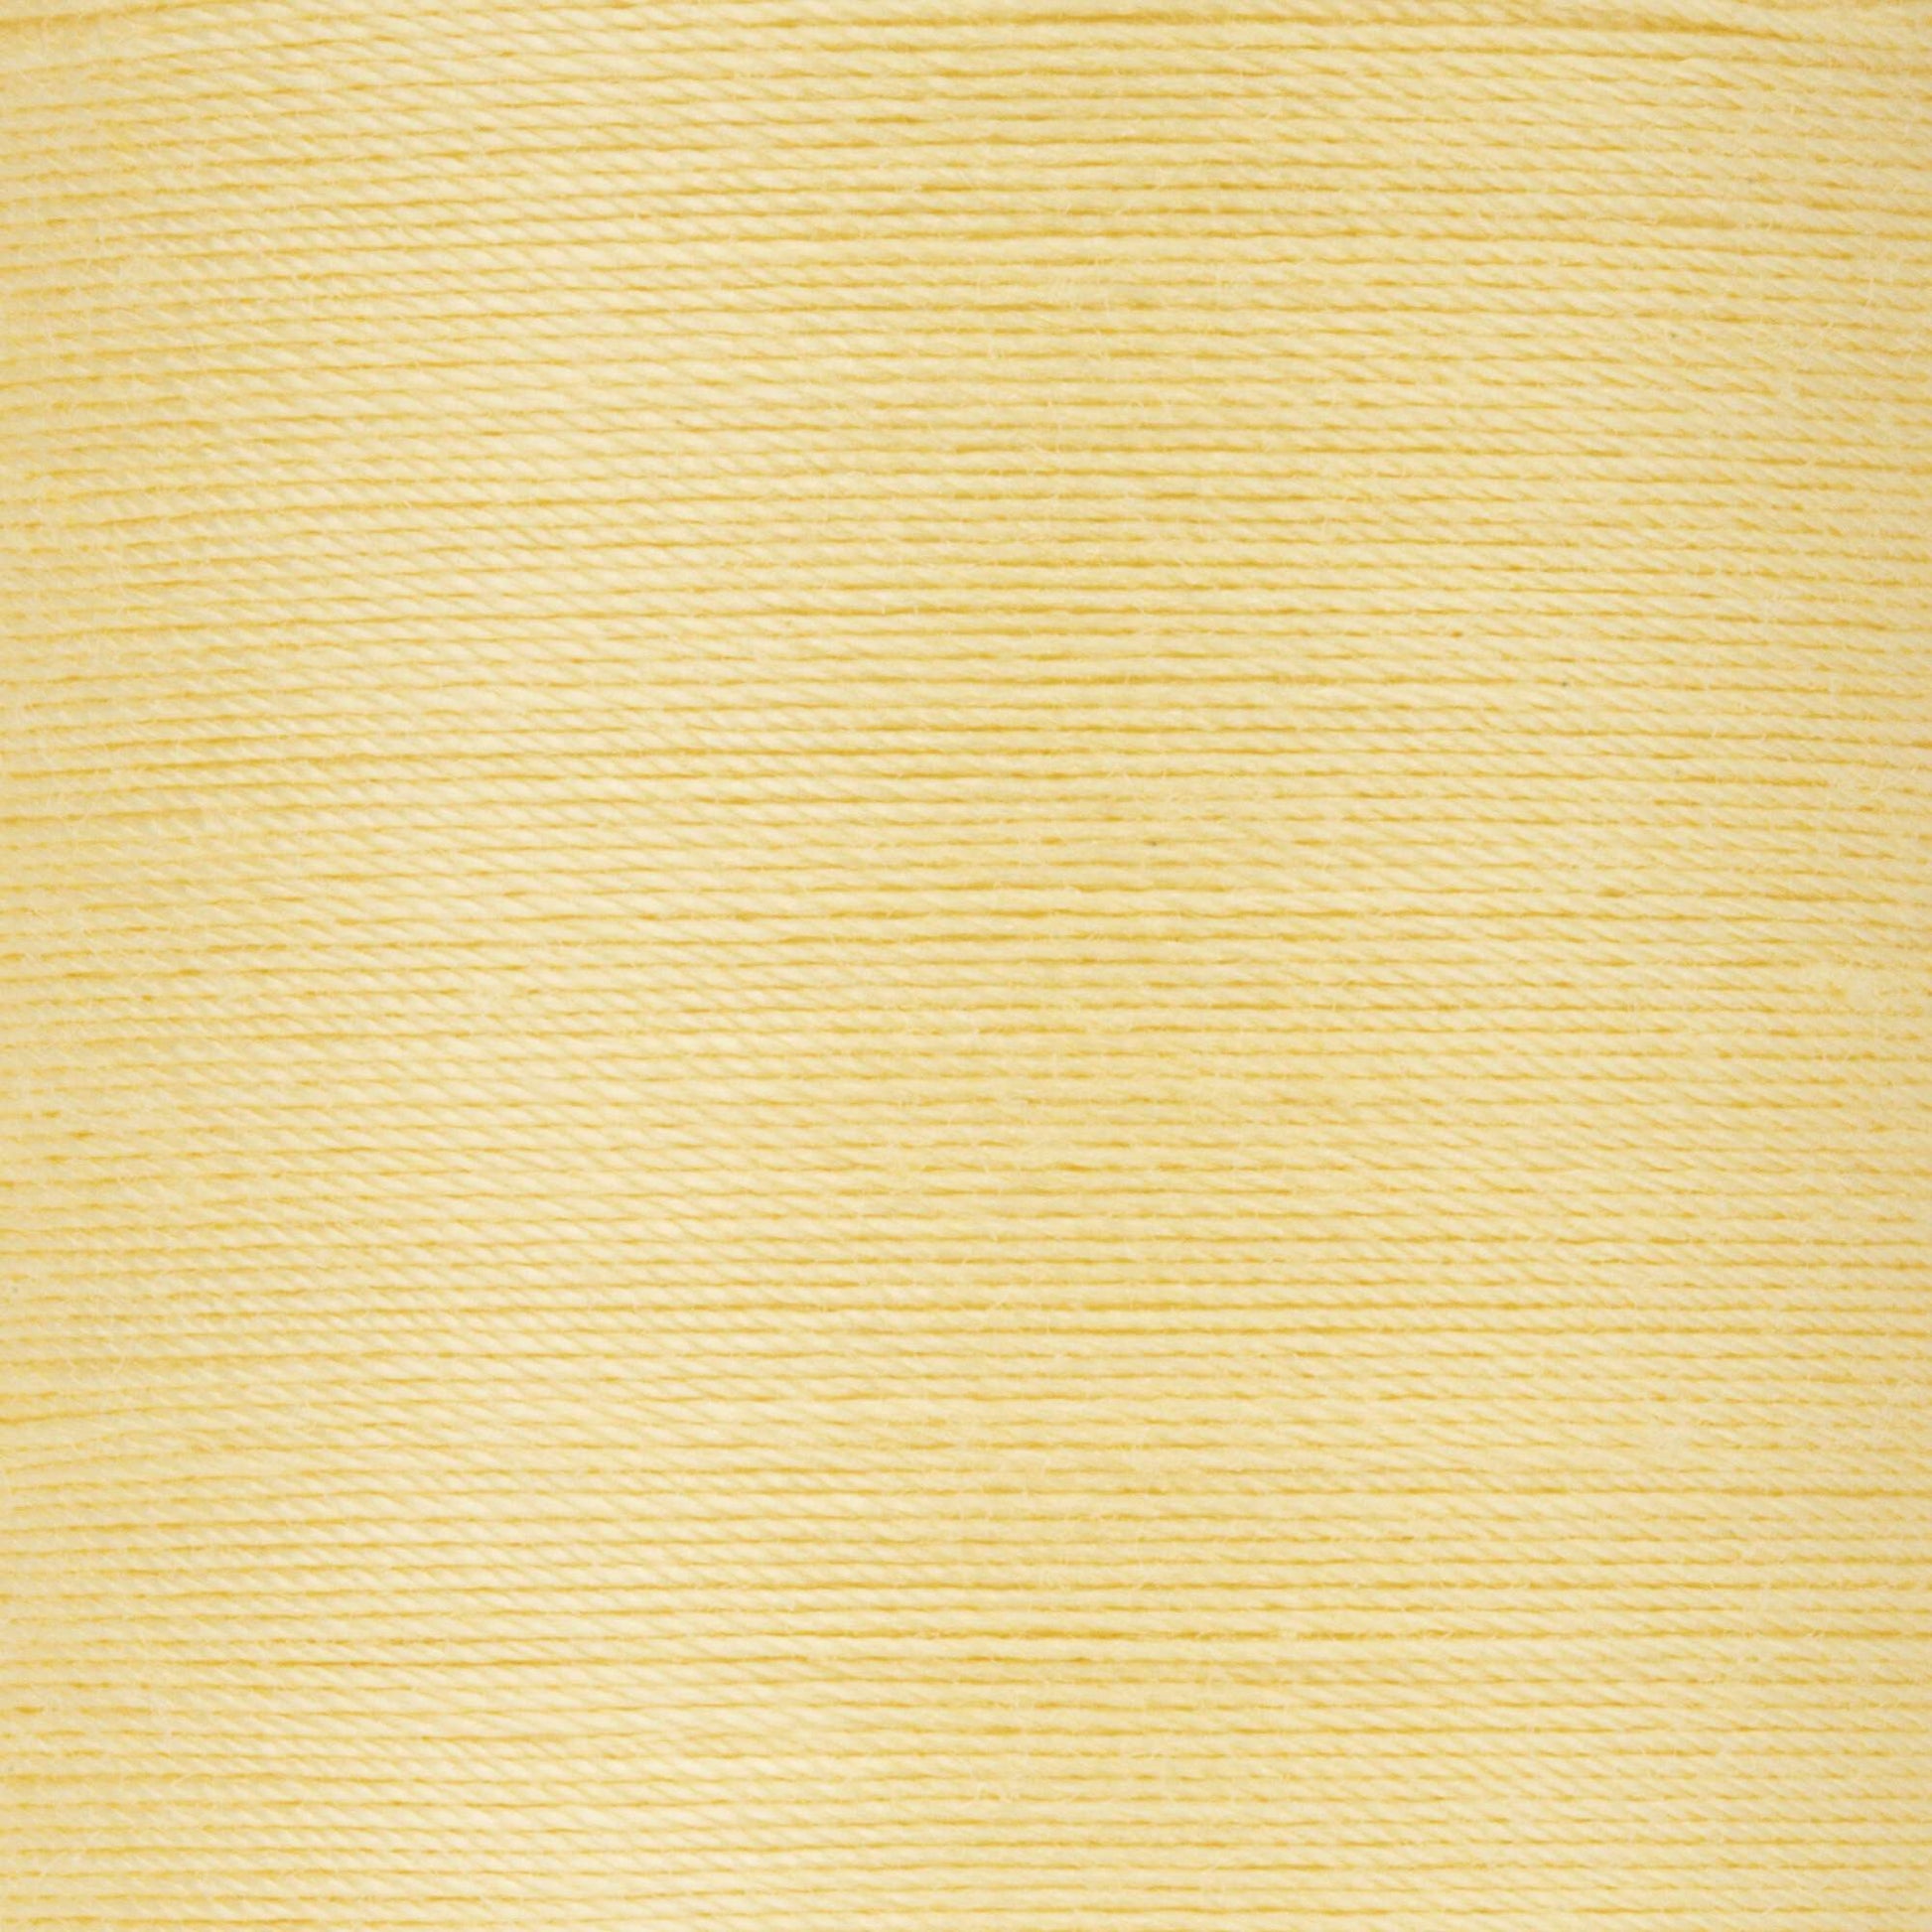 Coats & Clark Cotton Machine Quilting Thread (350 Yards) Yellow